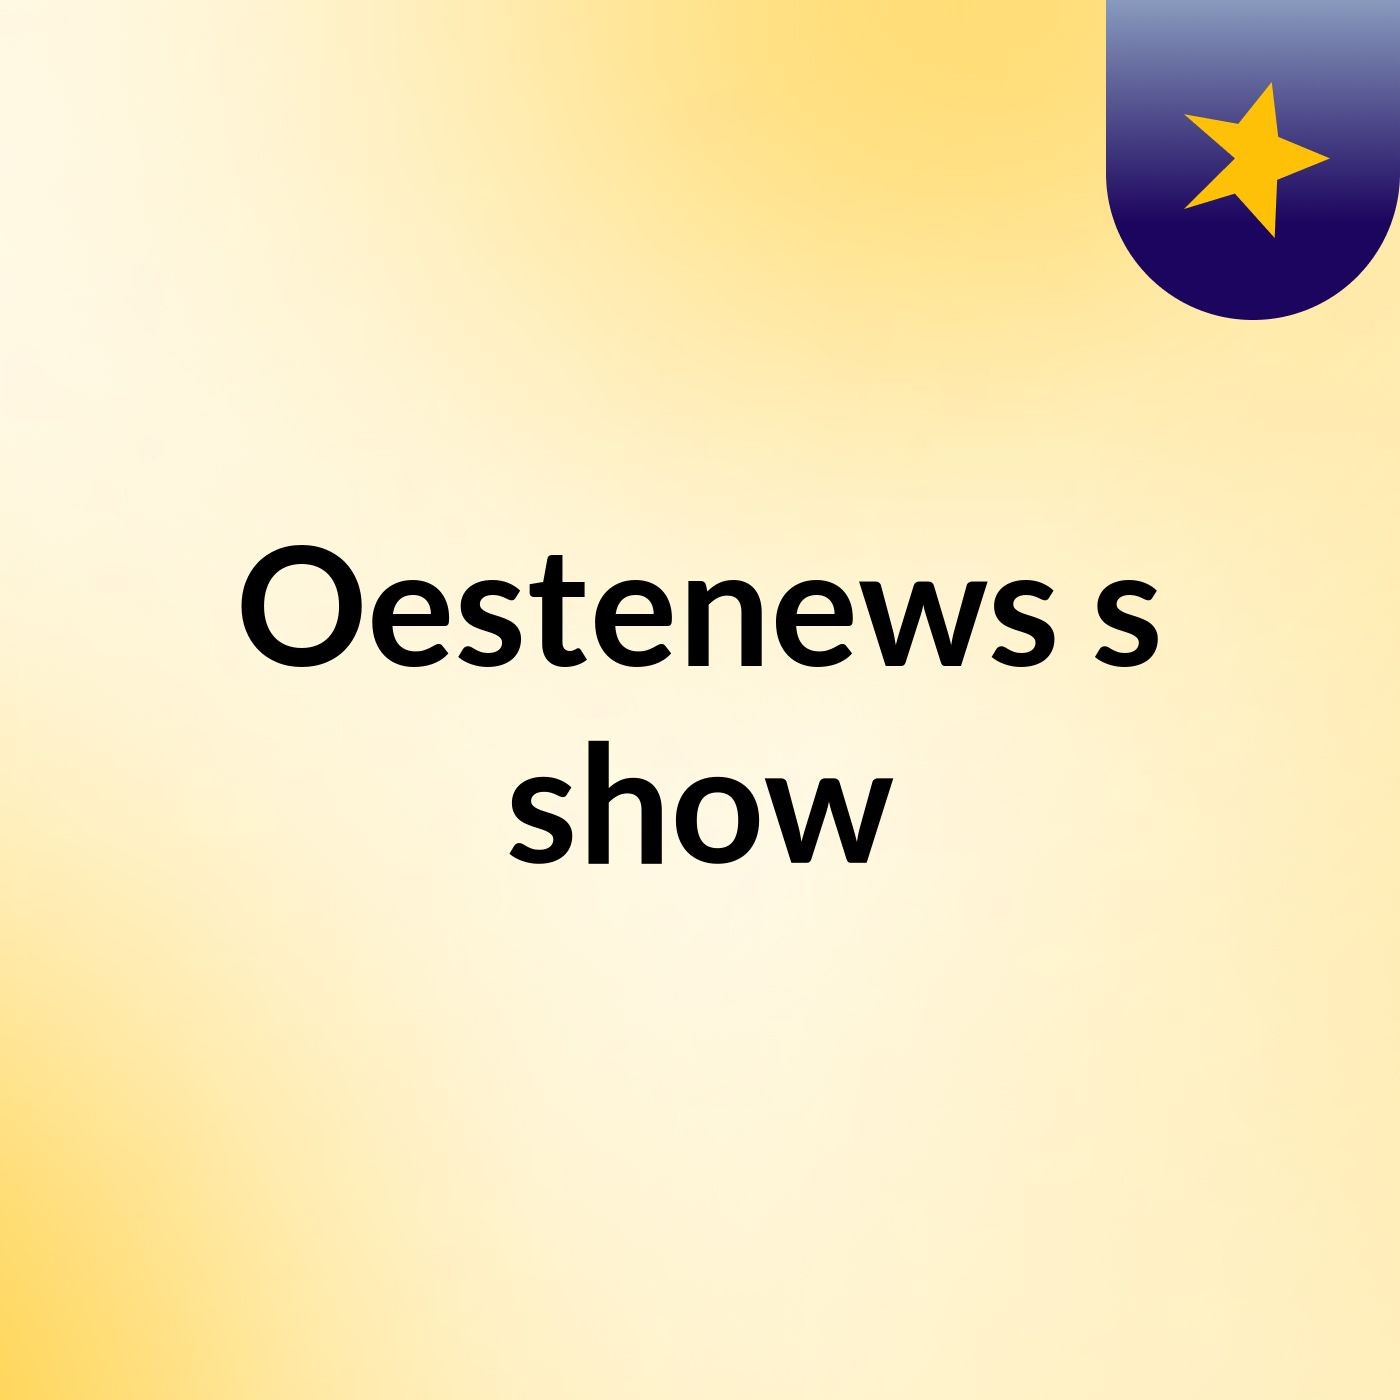 Oestenews's show